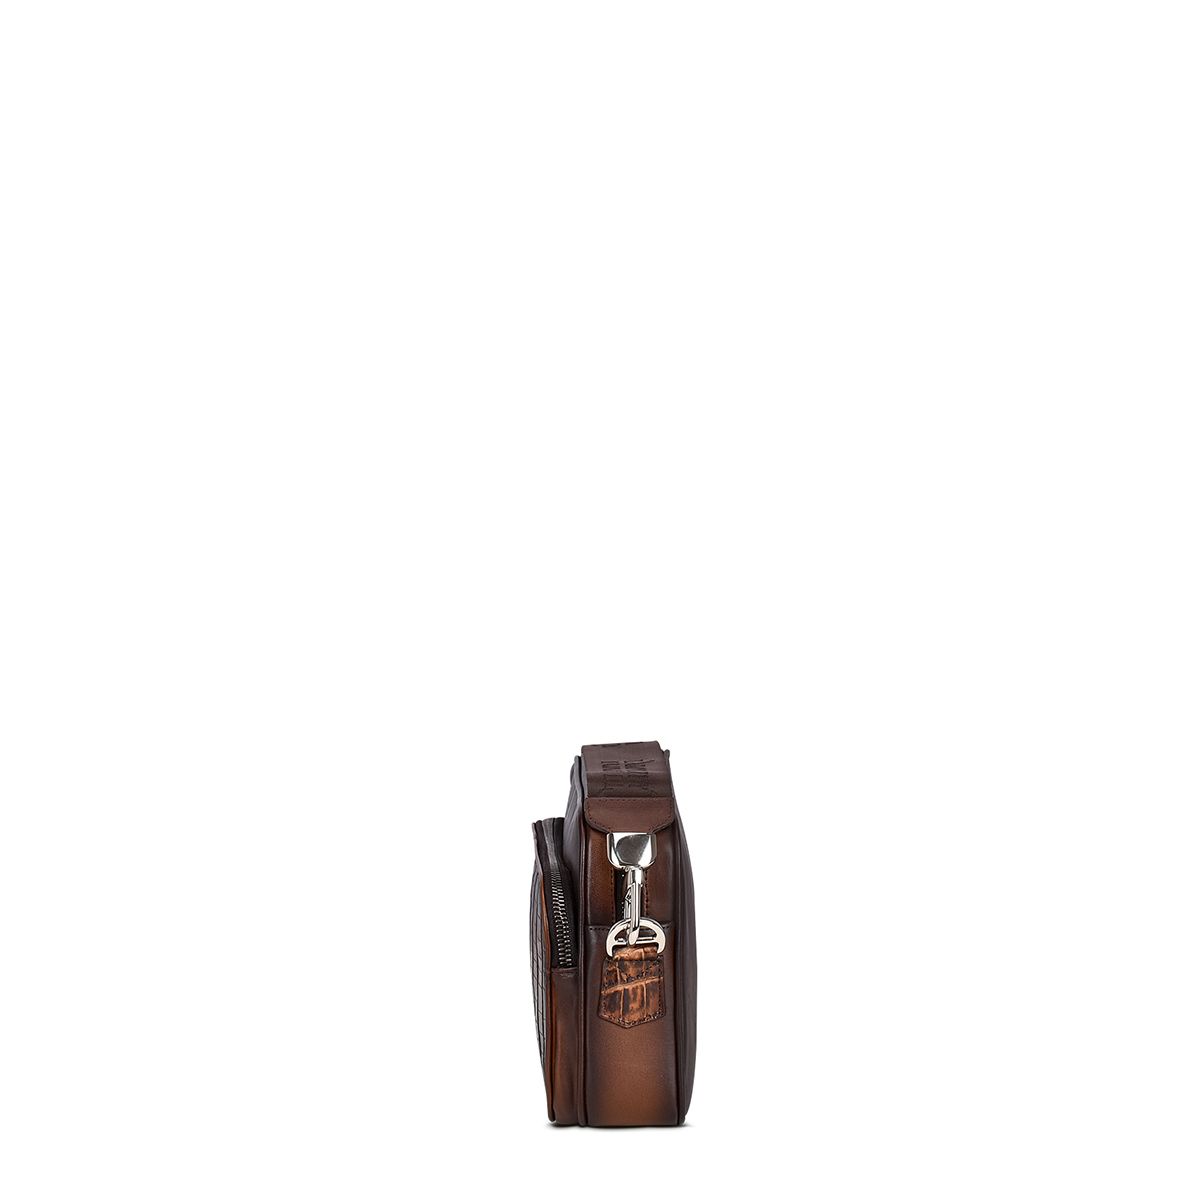 BOC04MO - Cuadra brown casual fashion moreleti chest chutch bag for men.-Kuet.us